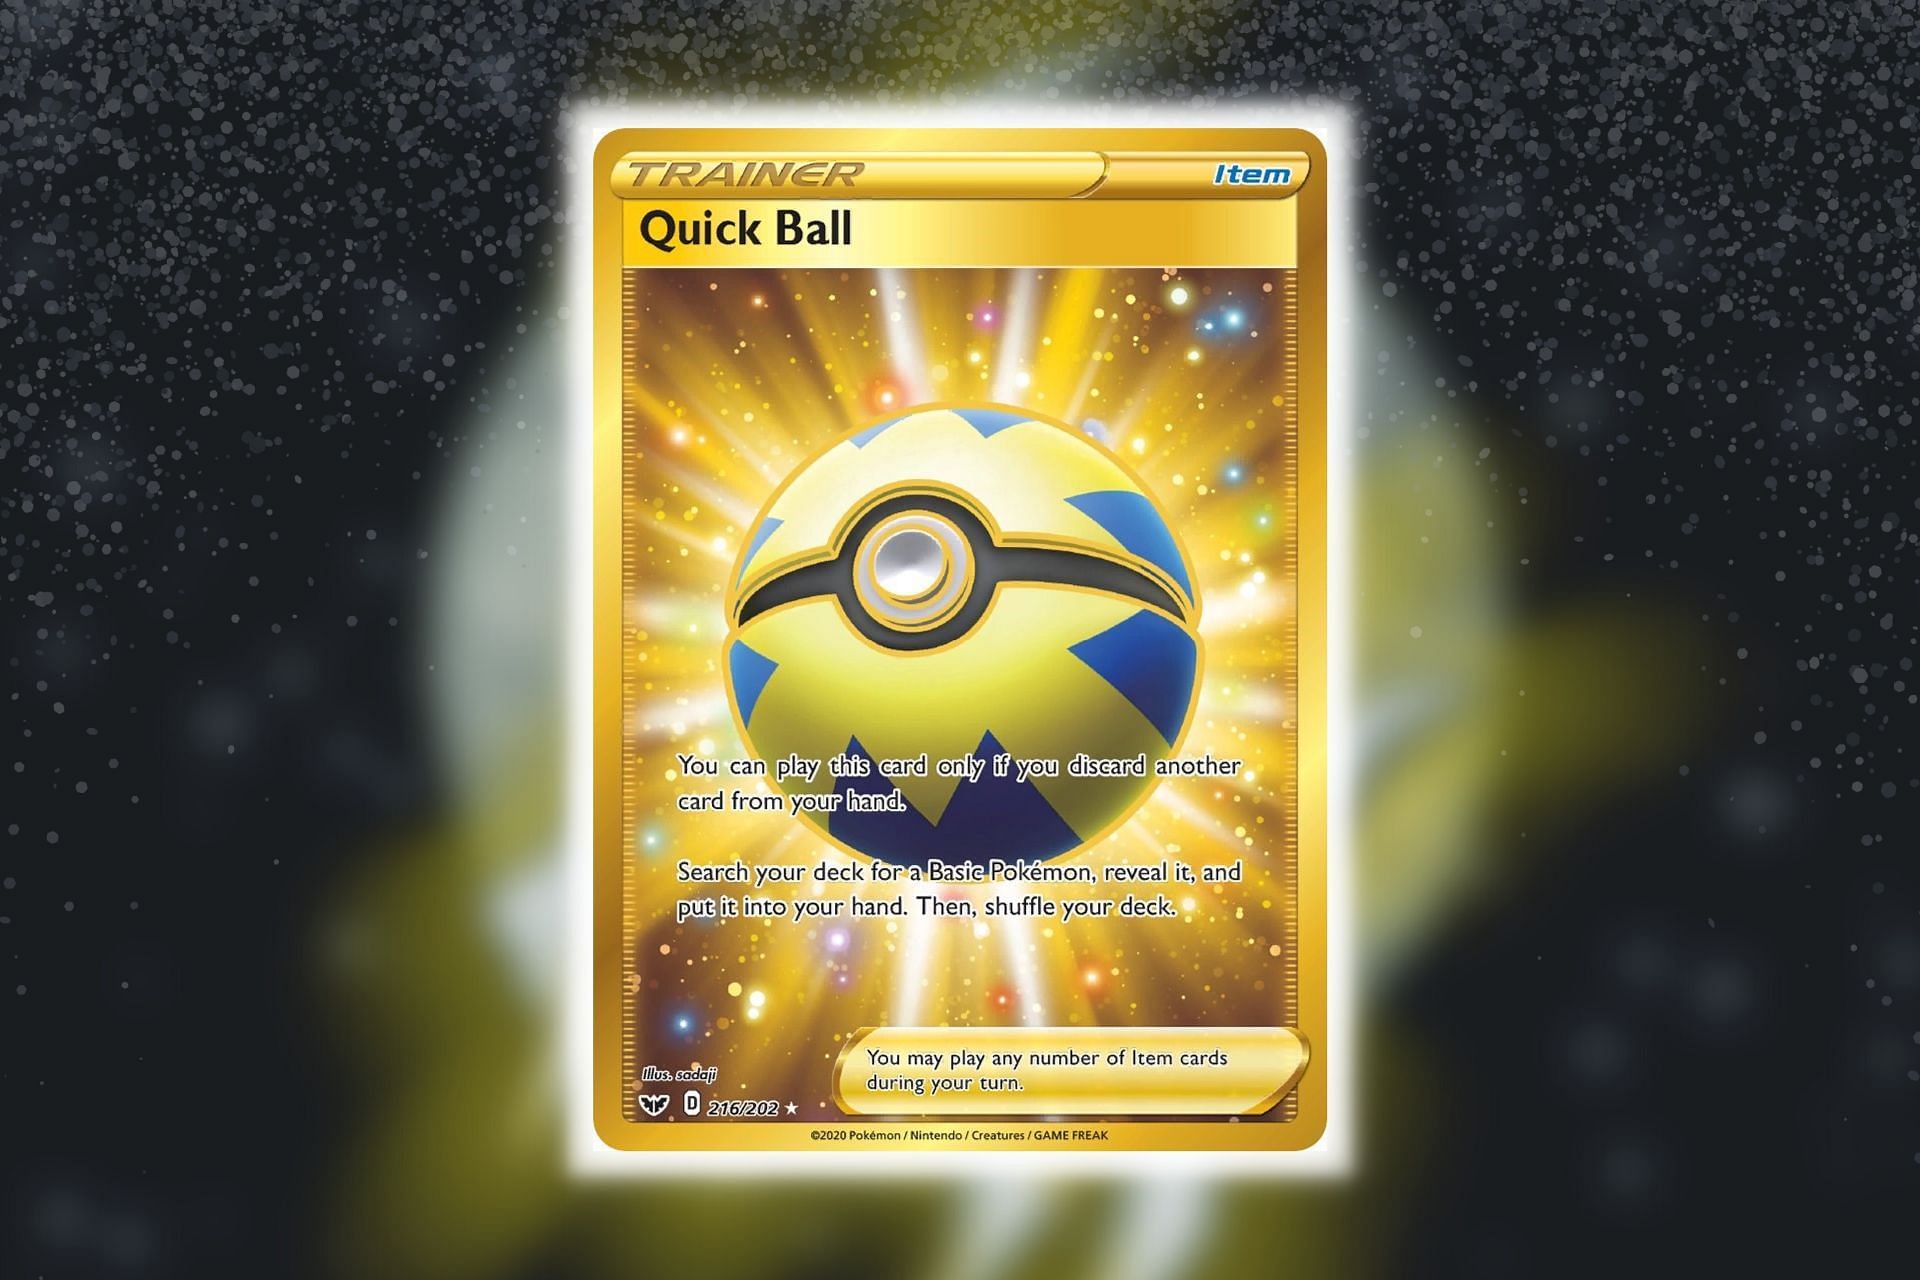 Quick Ball in Pokemon TCG (Image via The Pokemon Company)